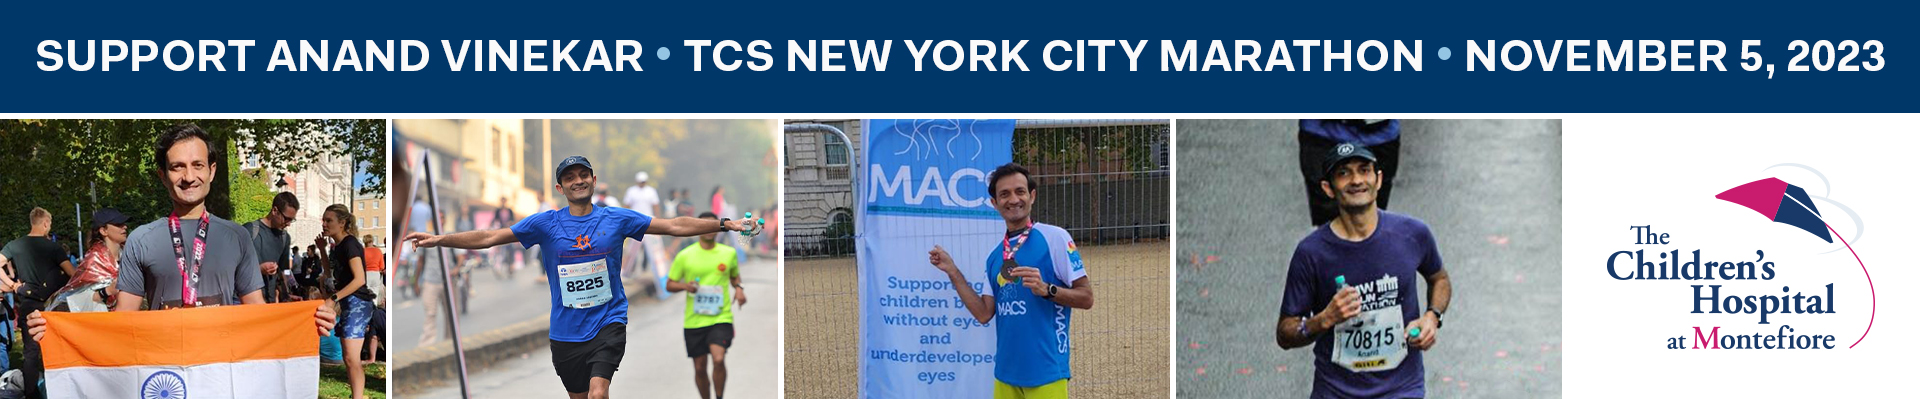 2023 TCS New York City Marathon Champions for CHAM Anand Vinekar